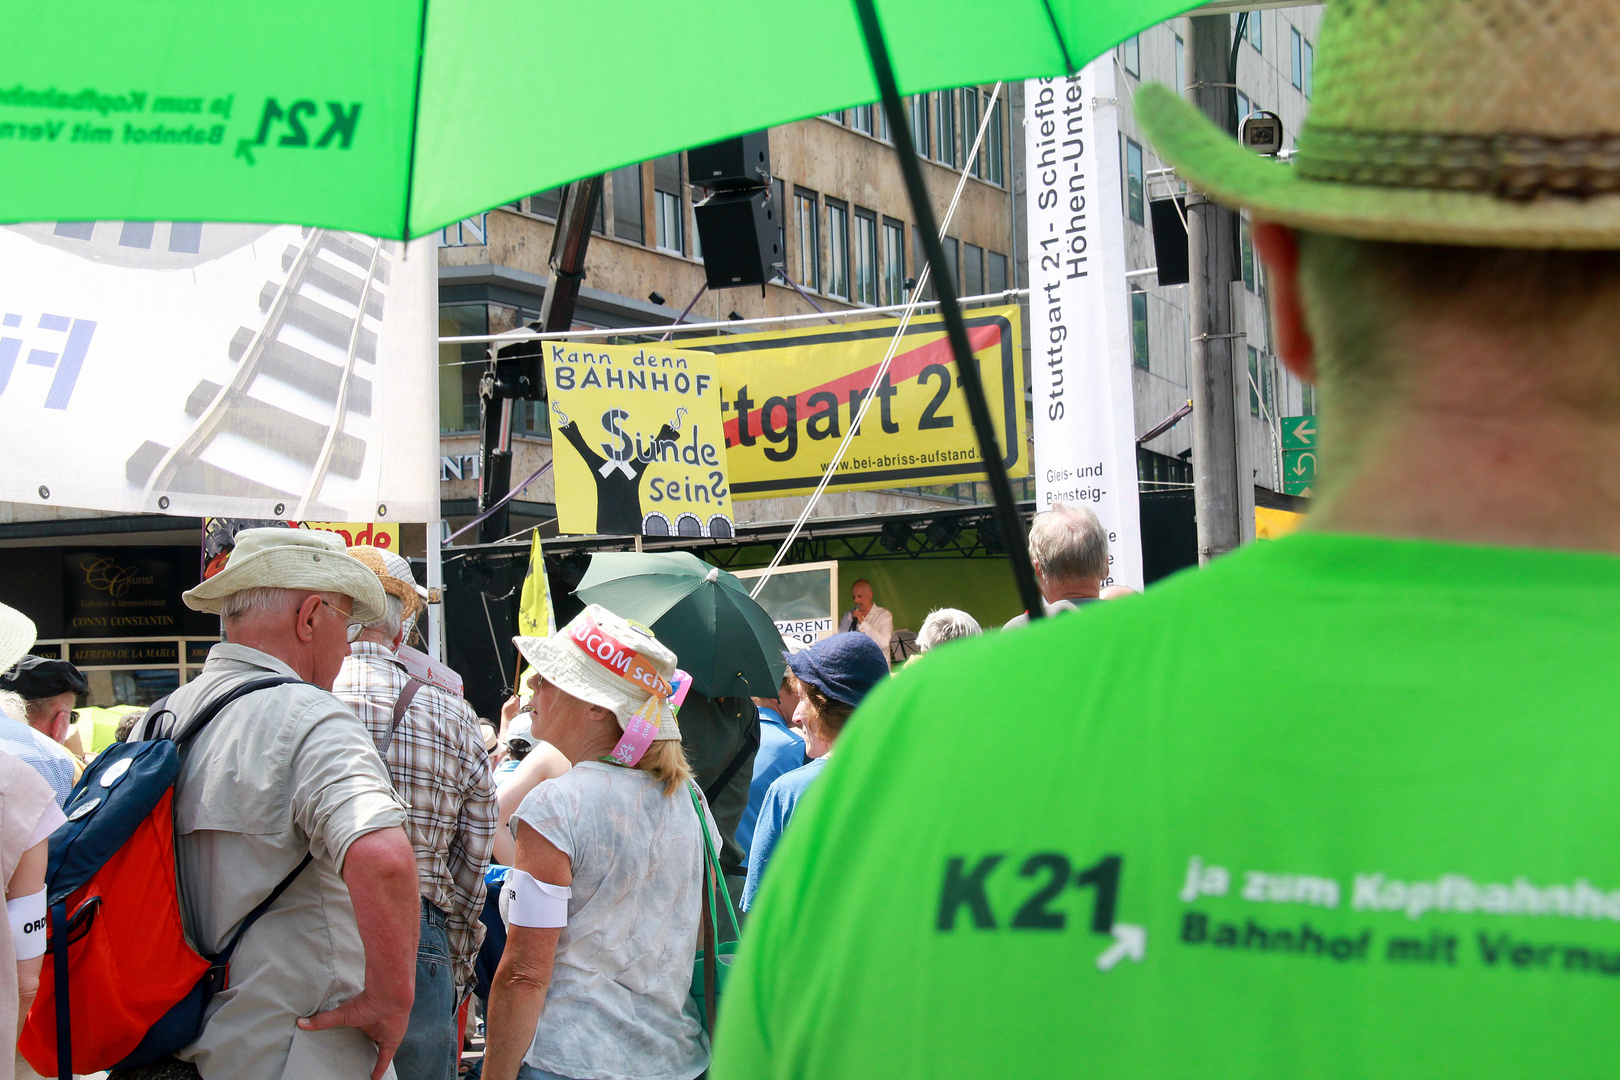 K21 Kundgebung 6.6.2015 SUENDE Stuttgart EvKT +TEXT TRAVELLING SBAHN